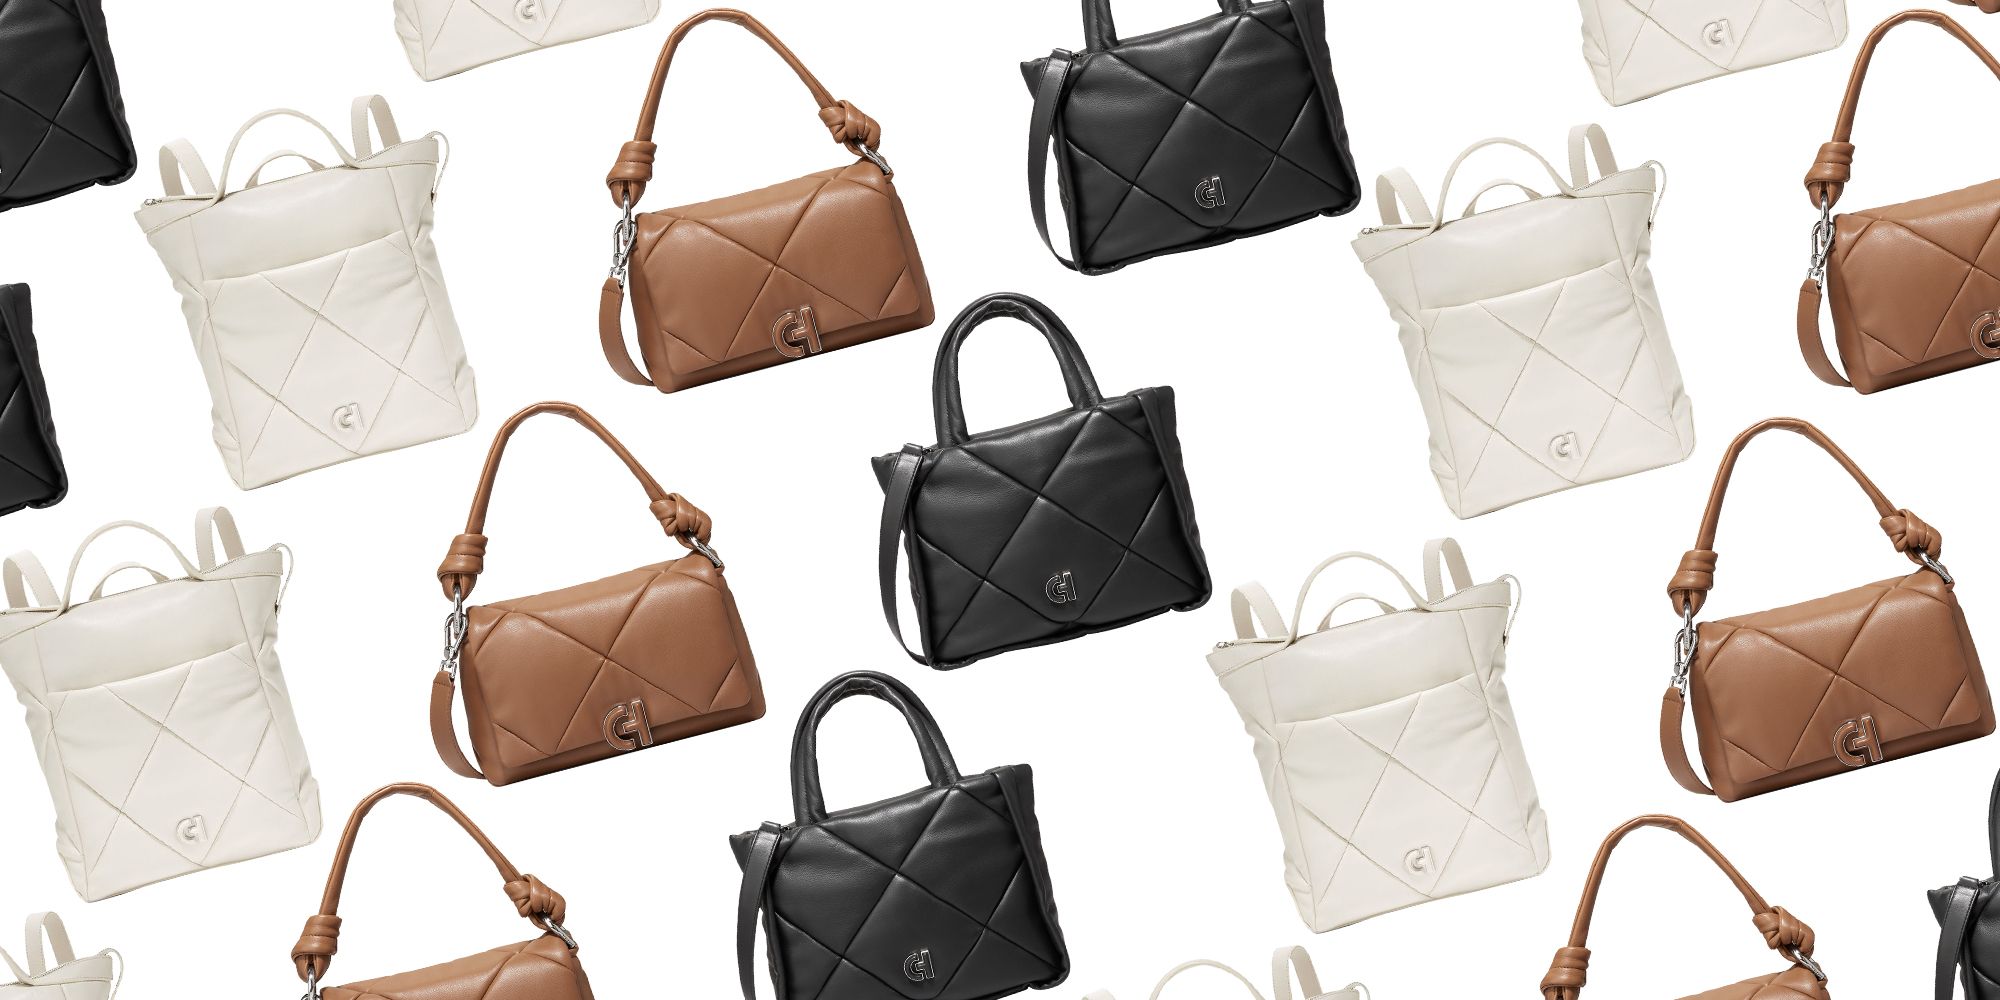 Handbags for Women: How to Choose The Best Handbags